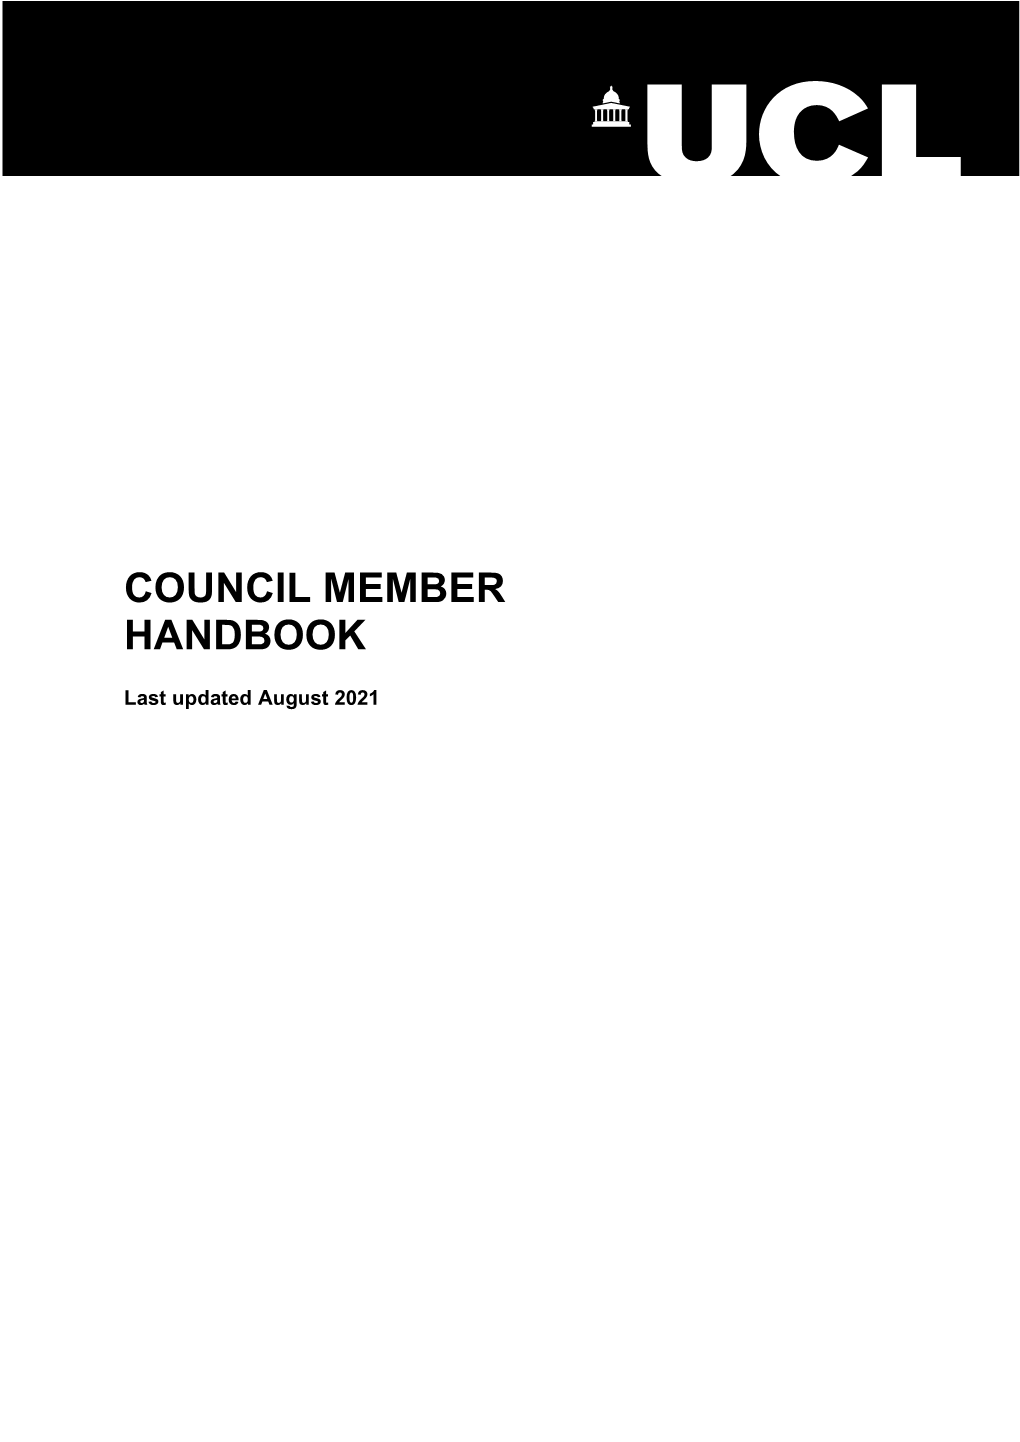 UCL Council Member Handbook